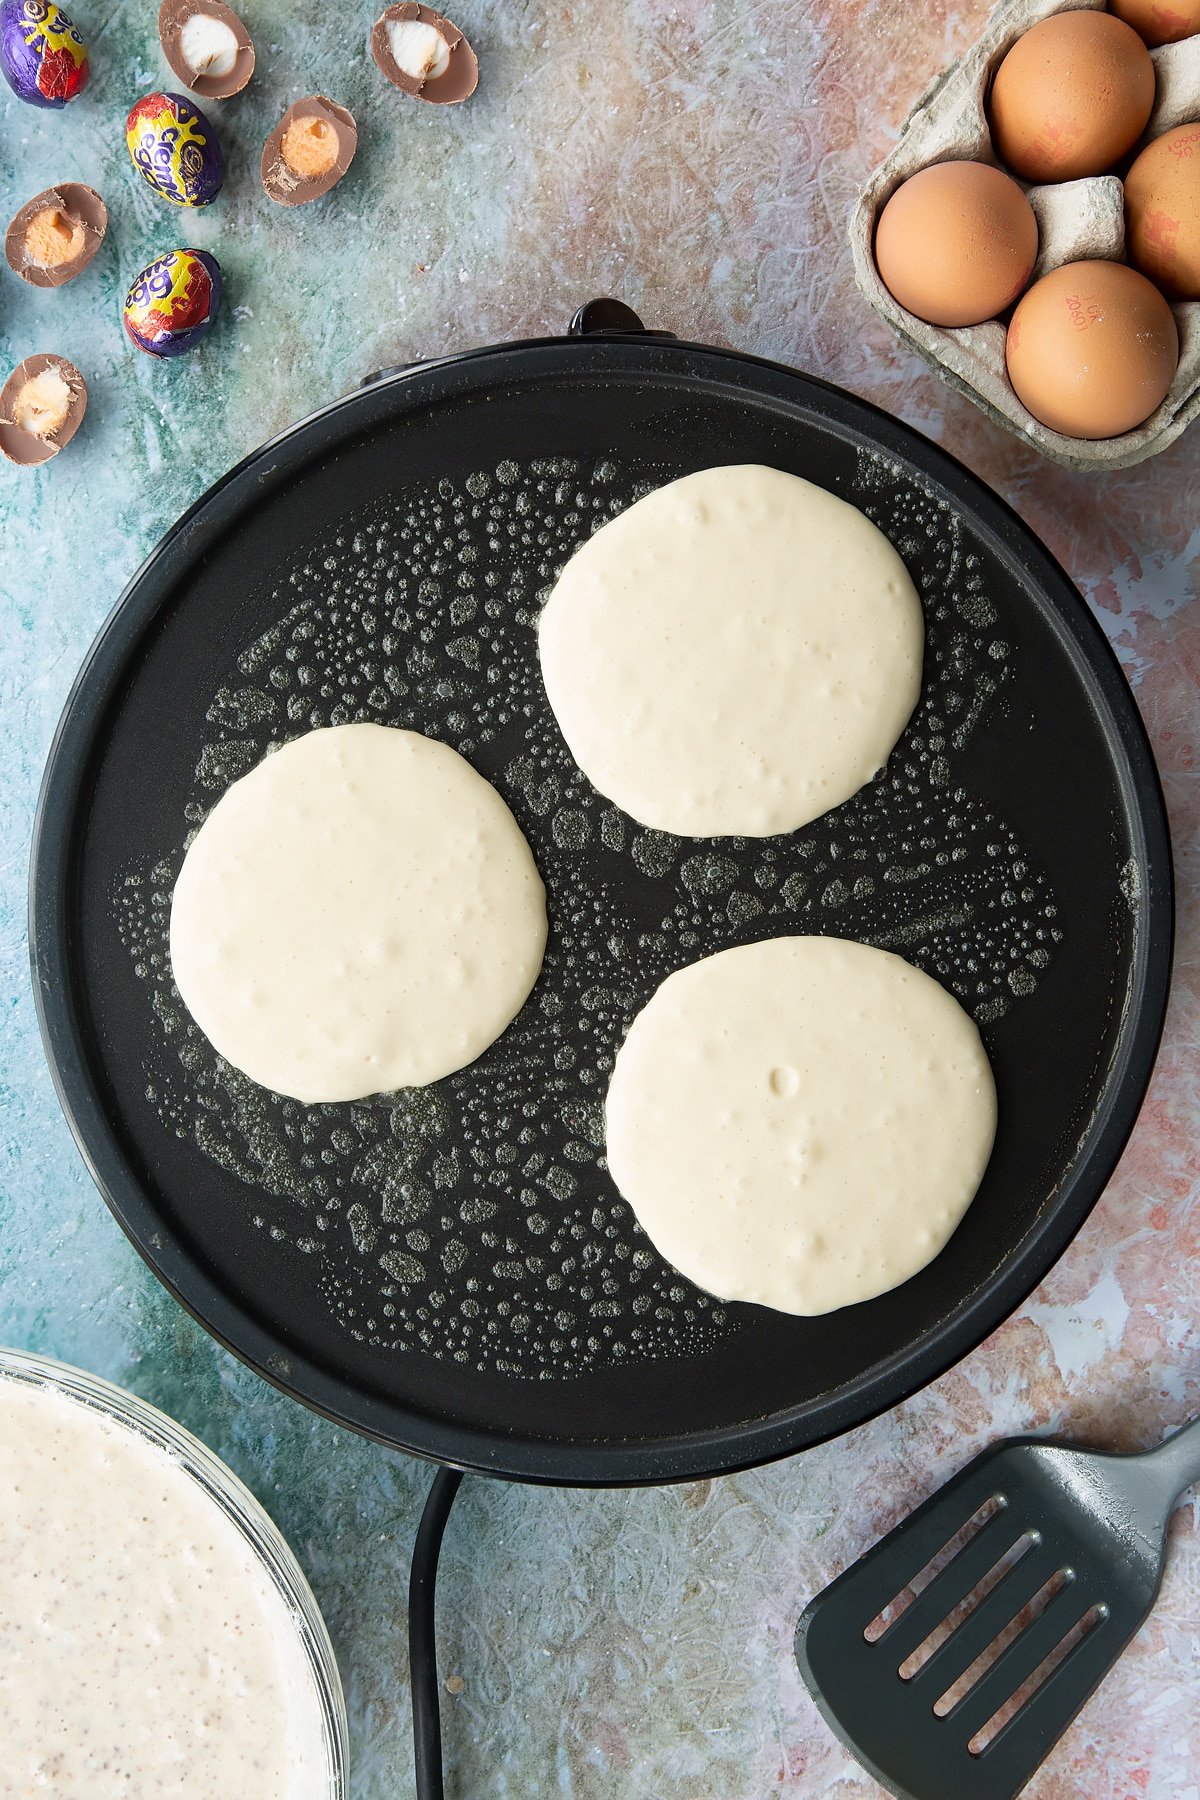 A hot pan with three scoops of pancake batter. Ingredients to make Creme Egg pancakes surround the pan.